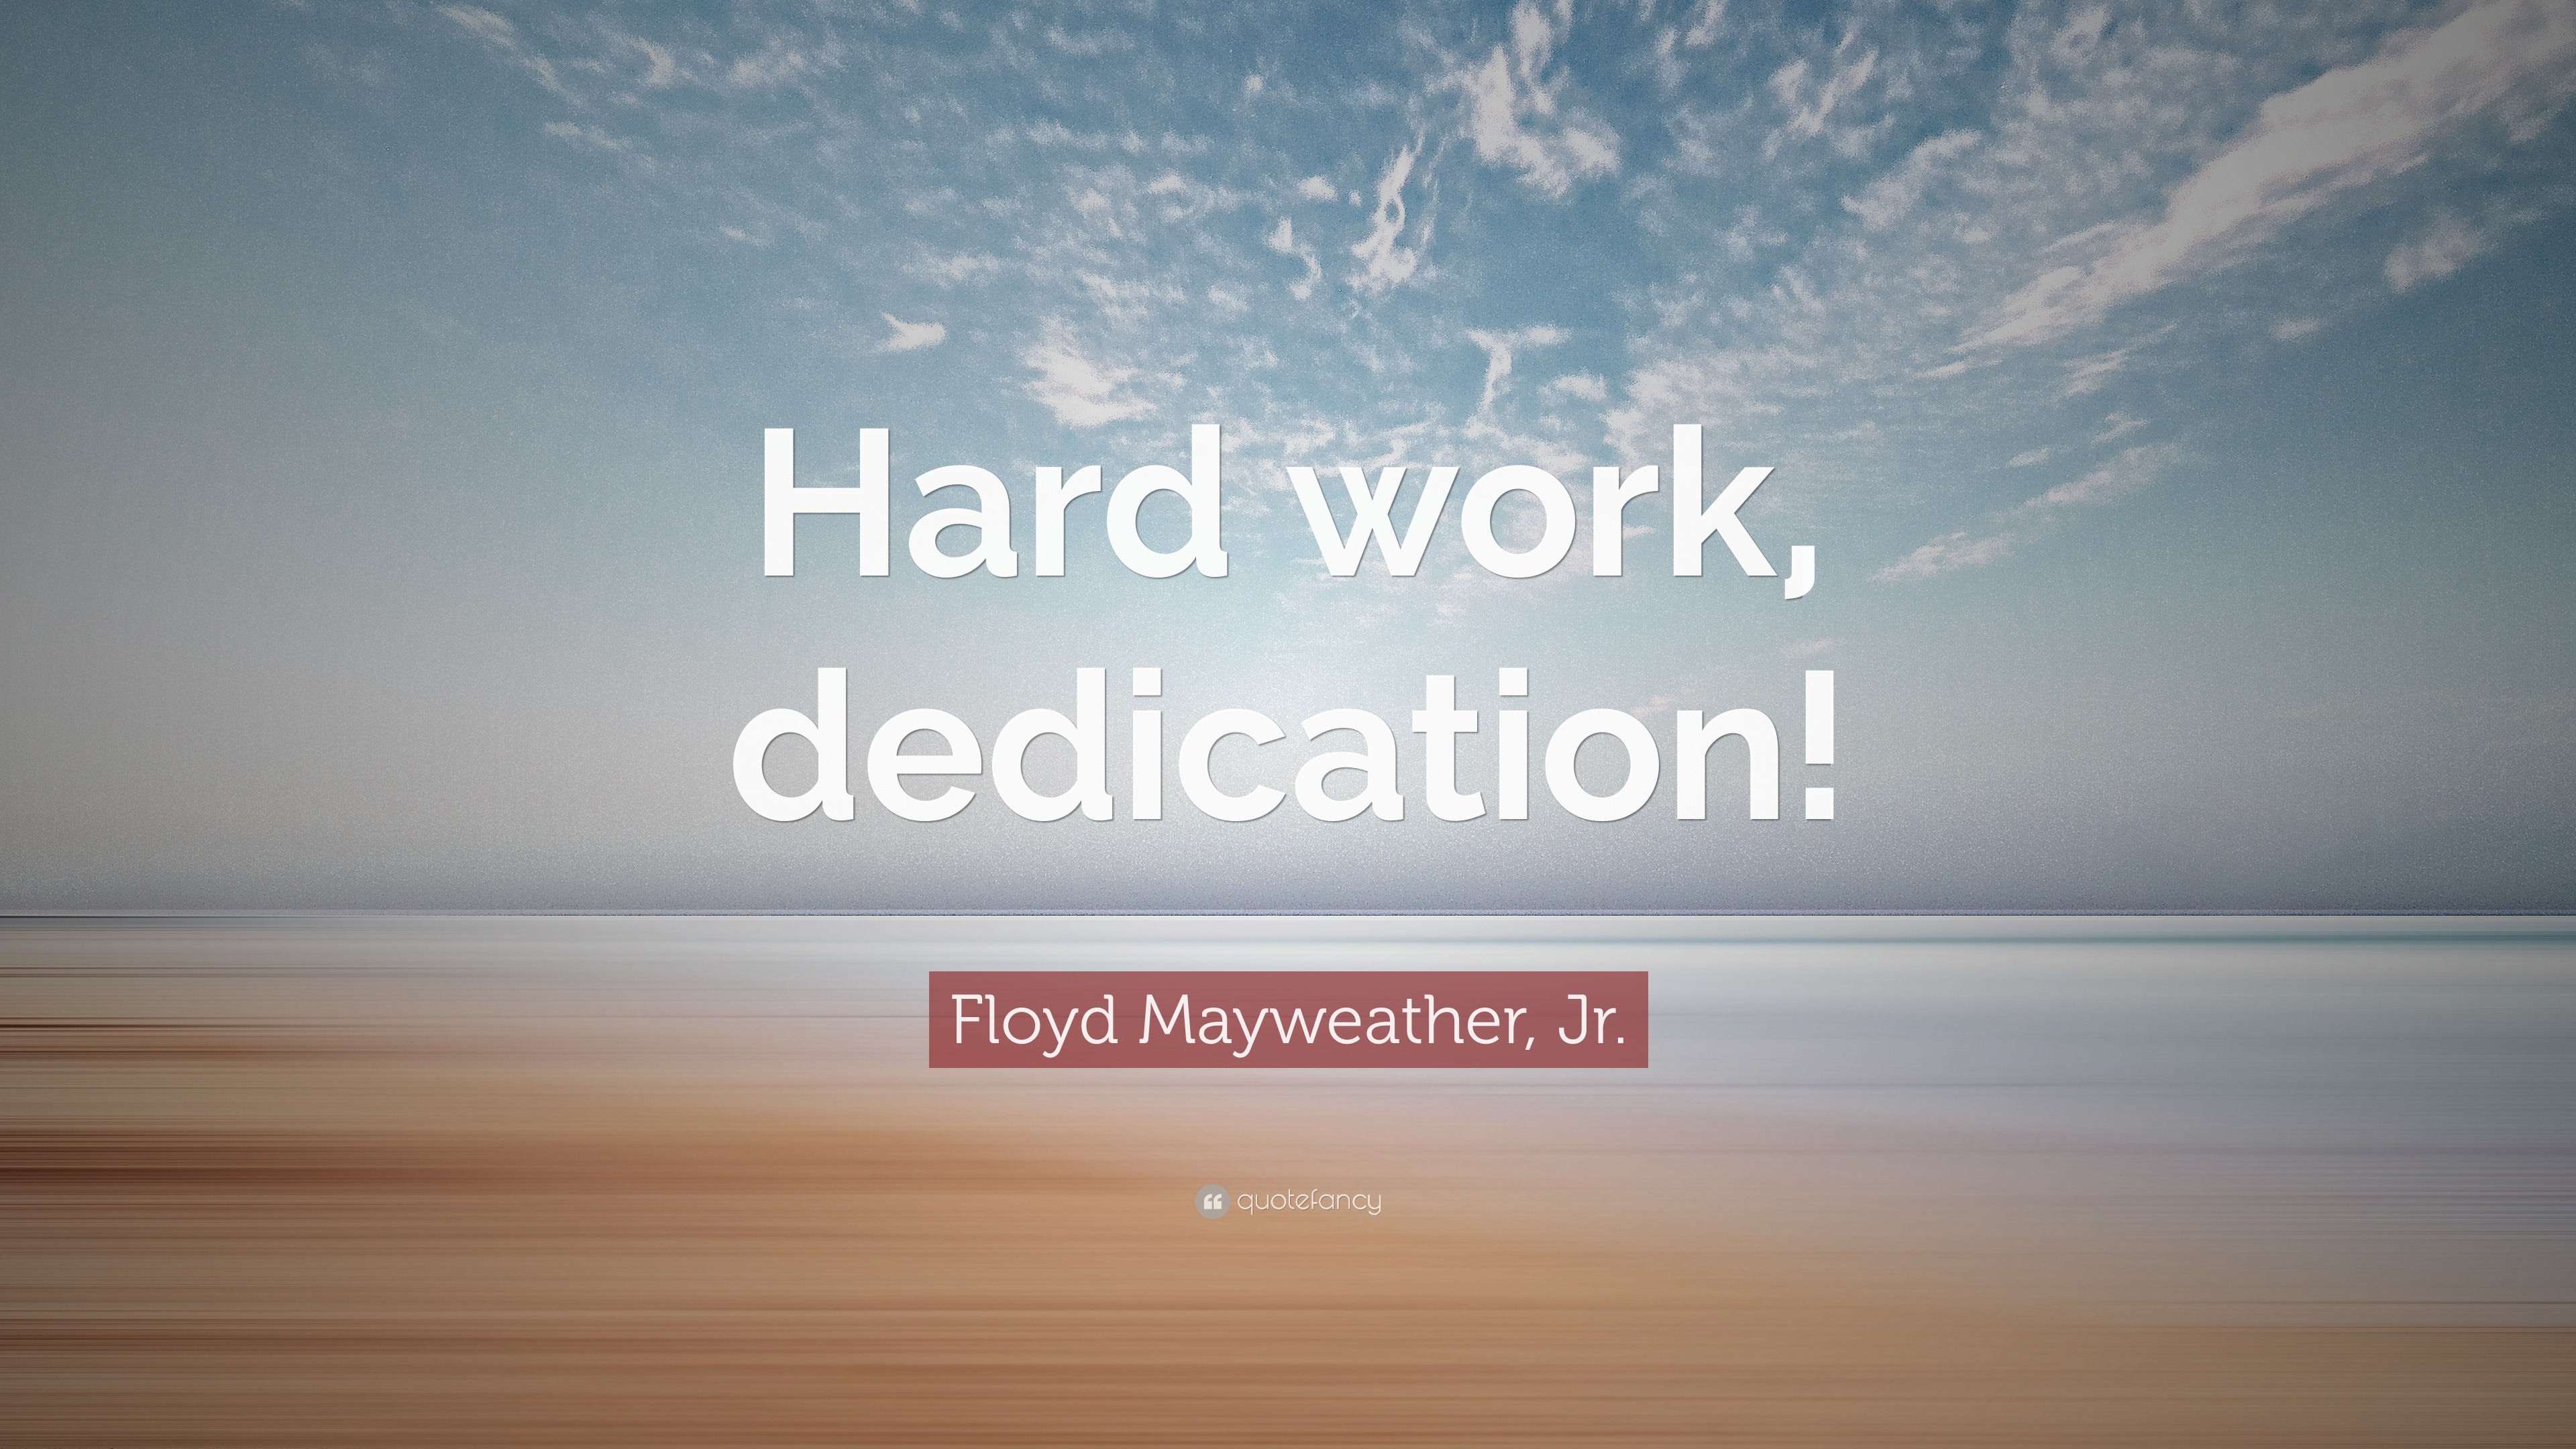 Floyd Mayweather Hard Work Dedication Wallpaper